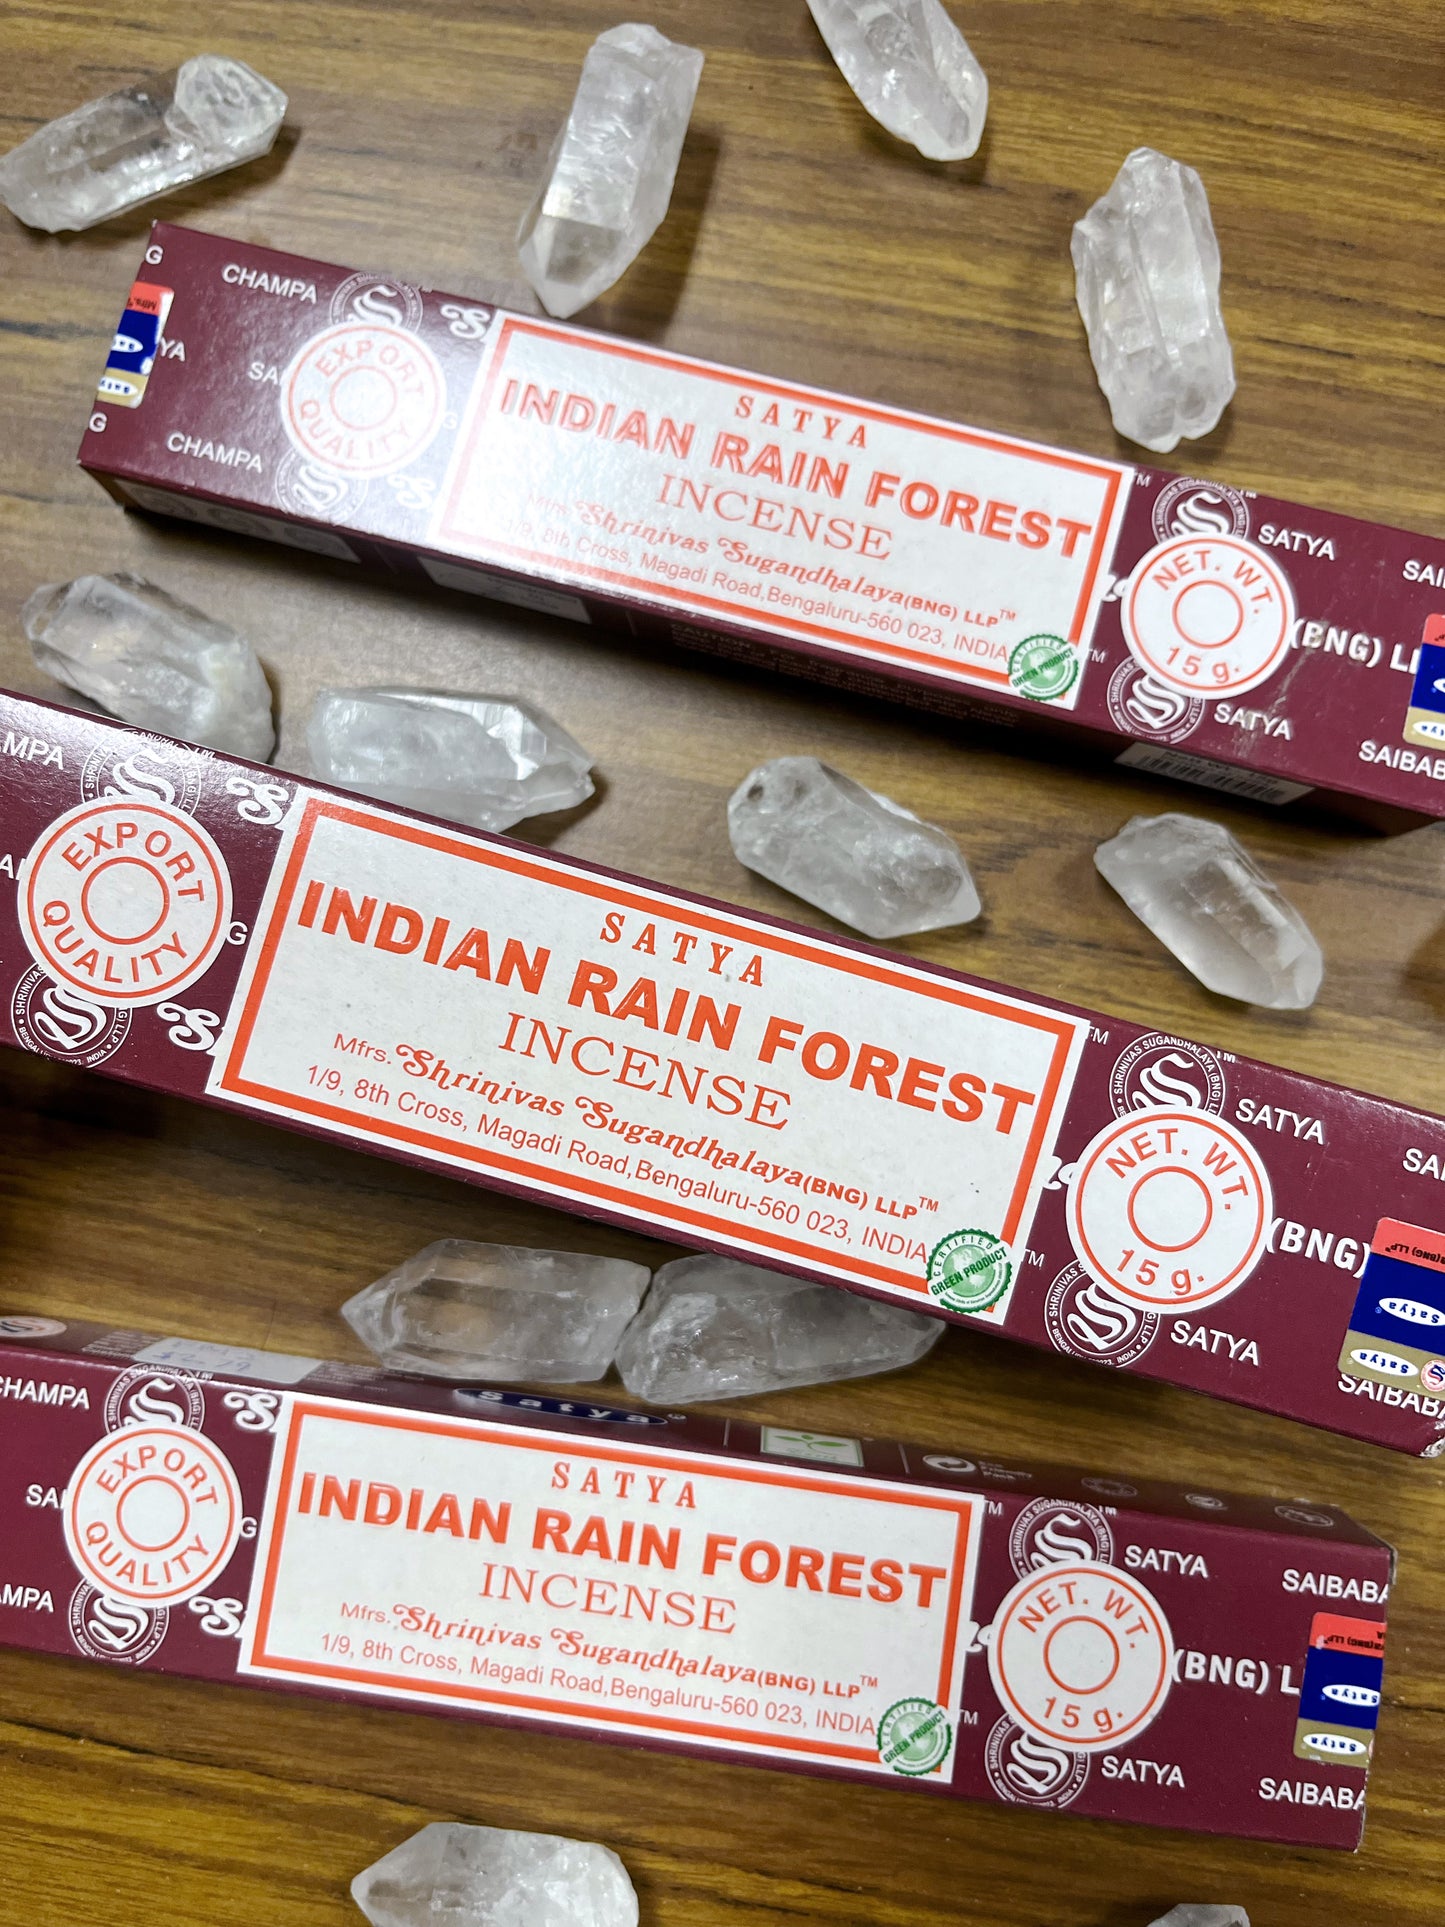 Indian Rain Forest incense sticks